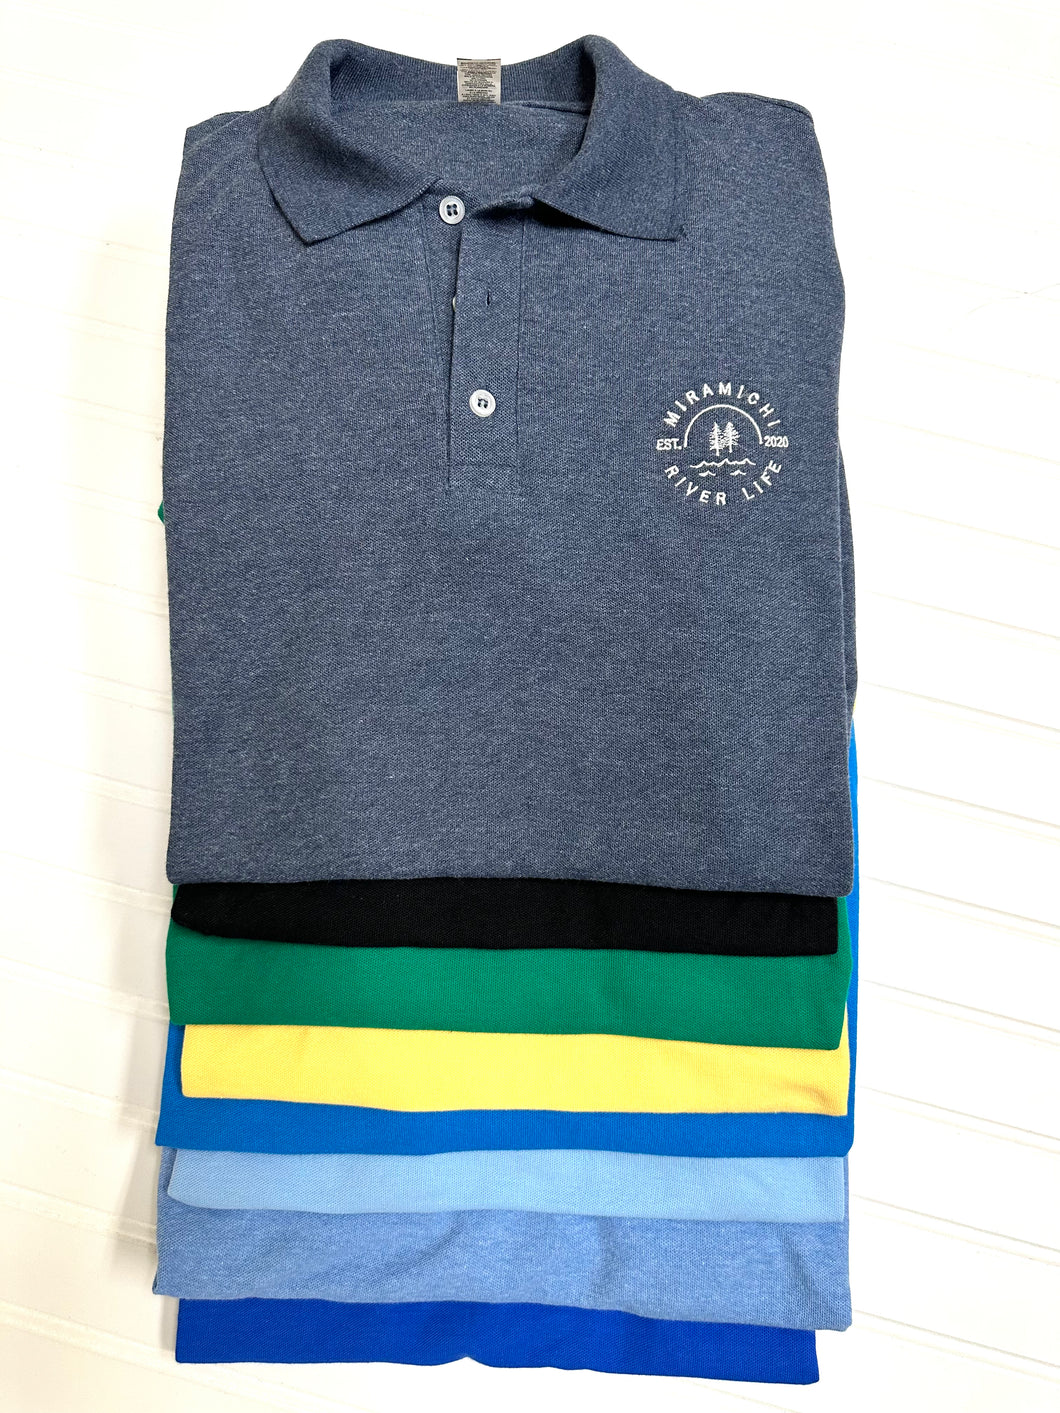 MRL Unisex Golf Shirt - NAVY